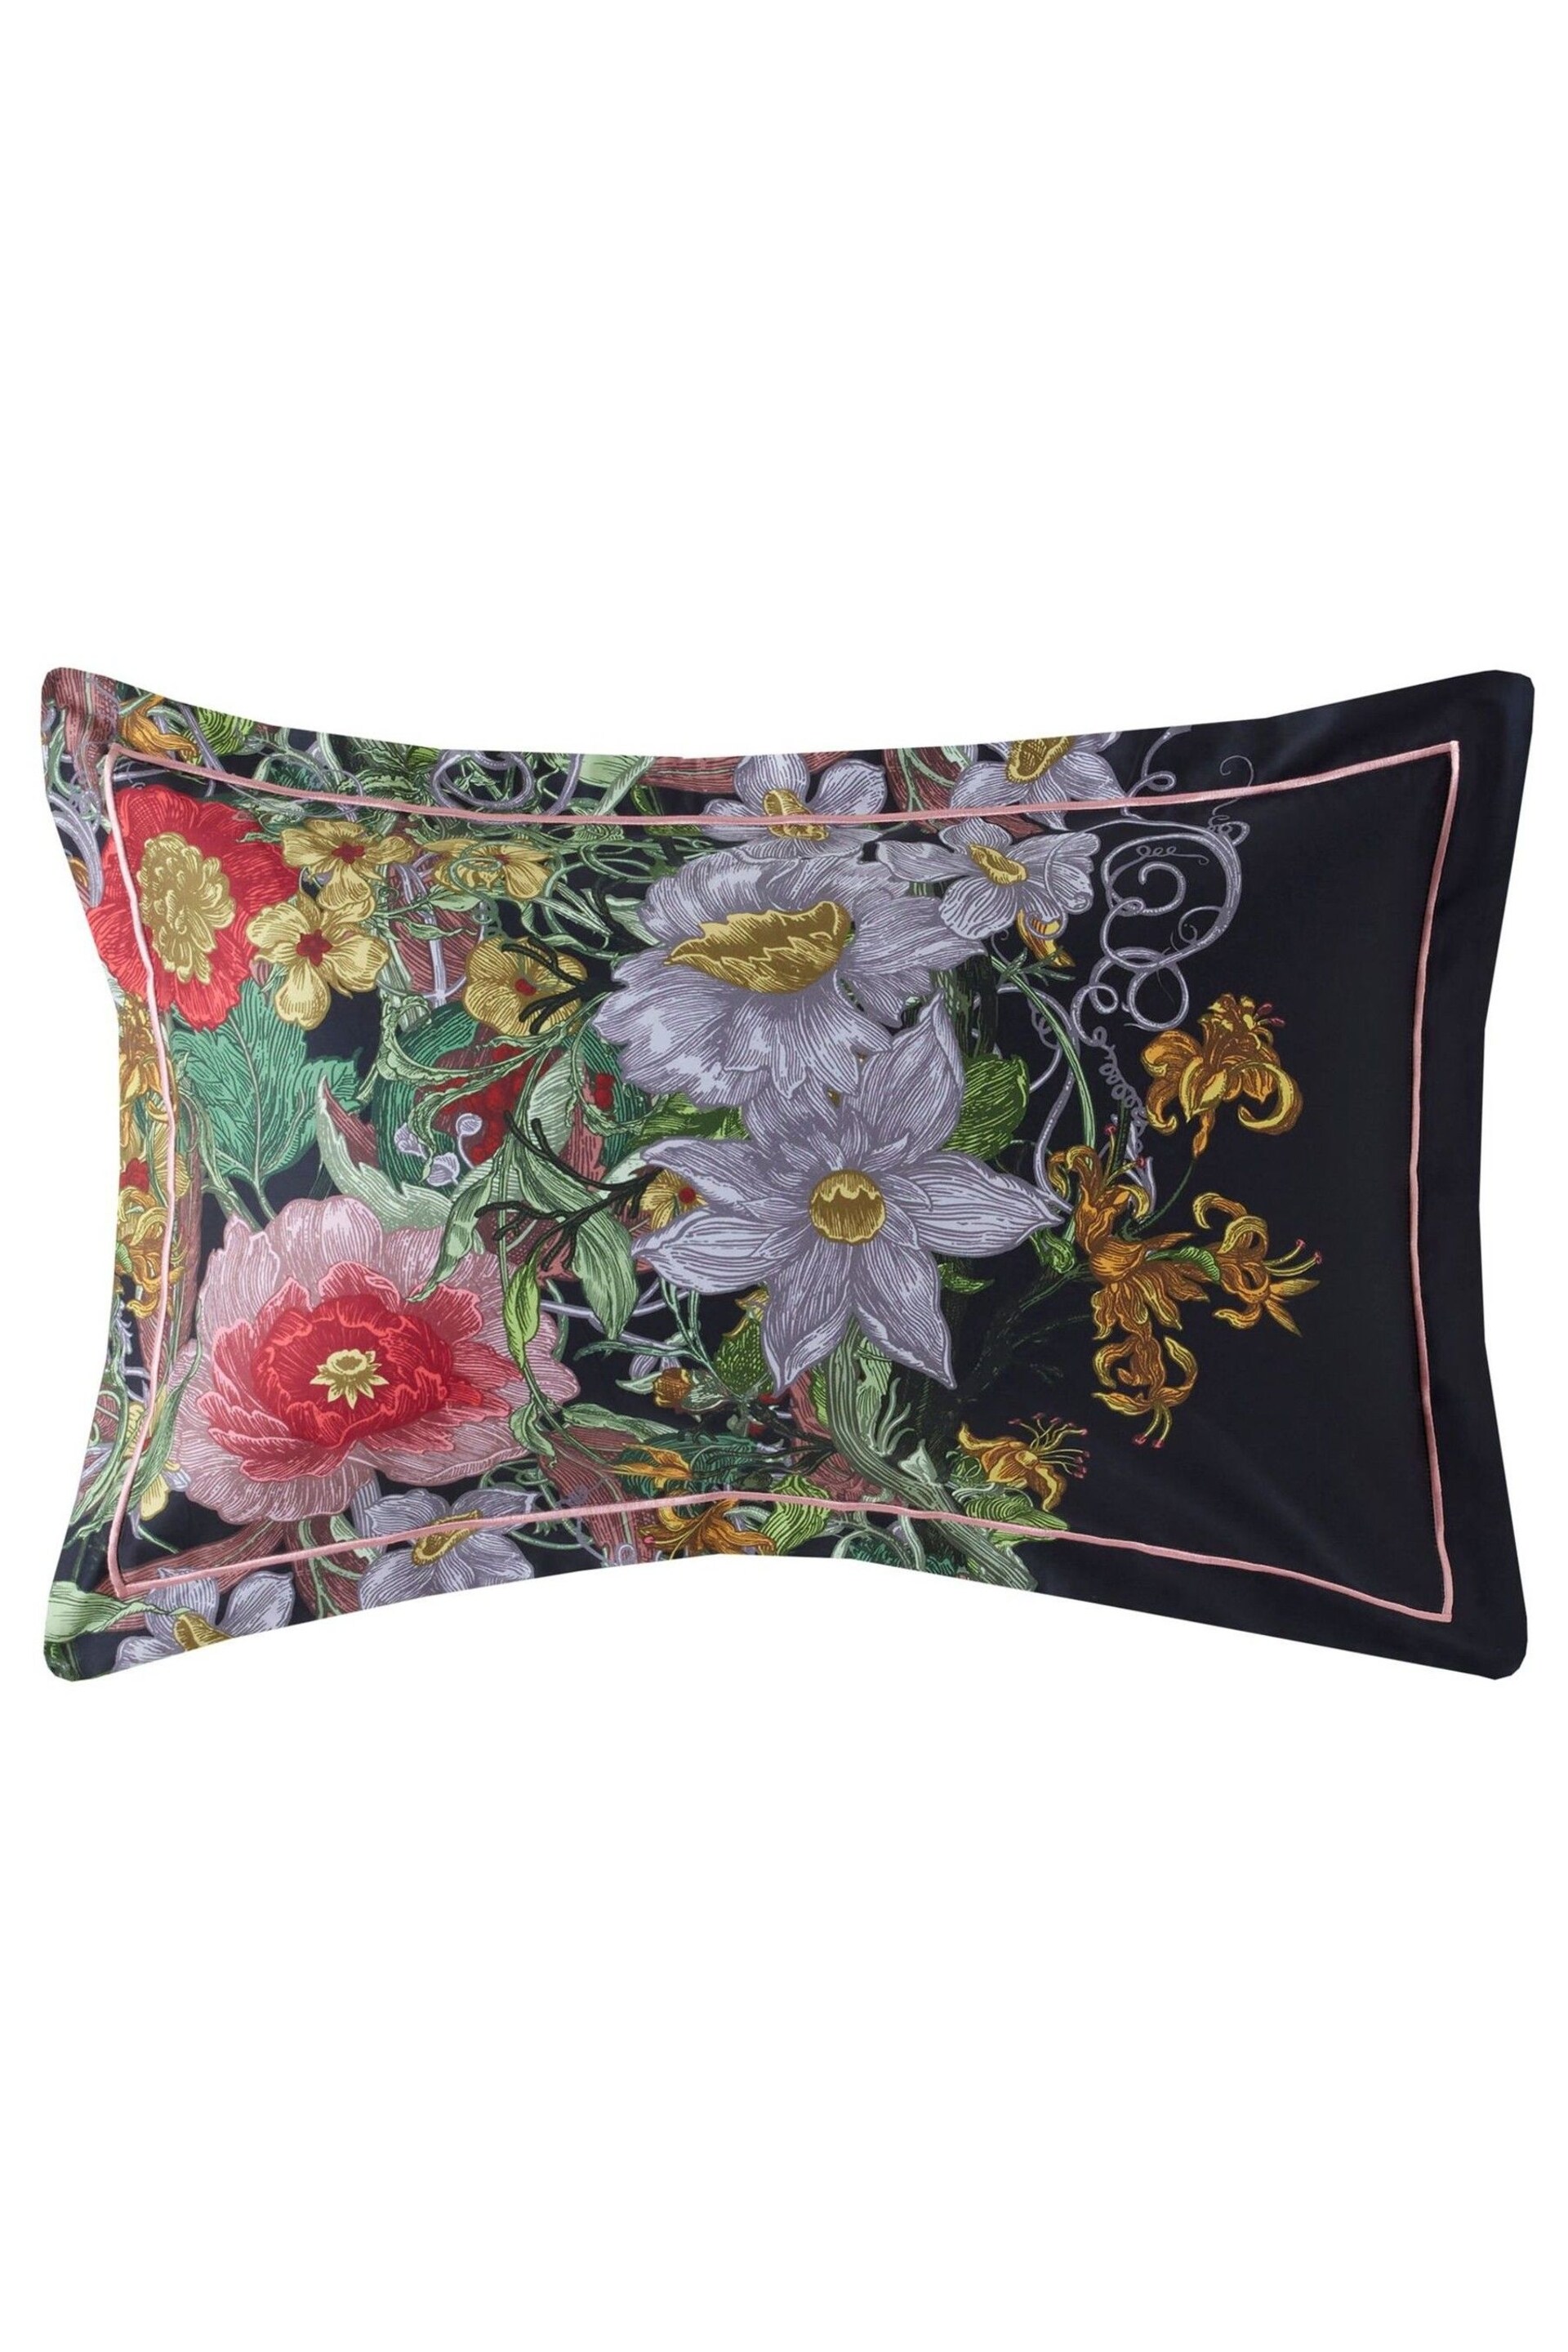 Timorous Beasties Midnight Berkeley Blooms Duvet Cover and Pillowcase Set - Image 7 of 8